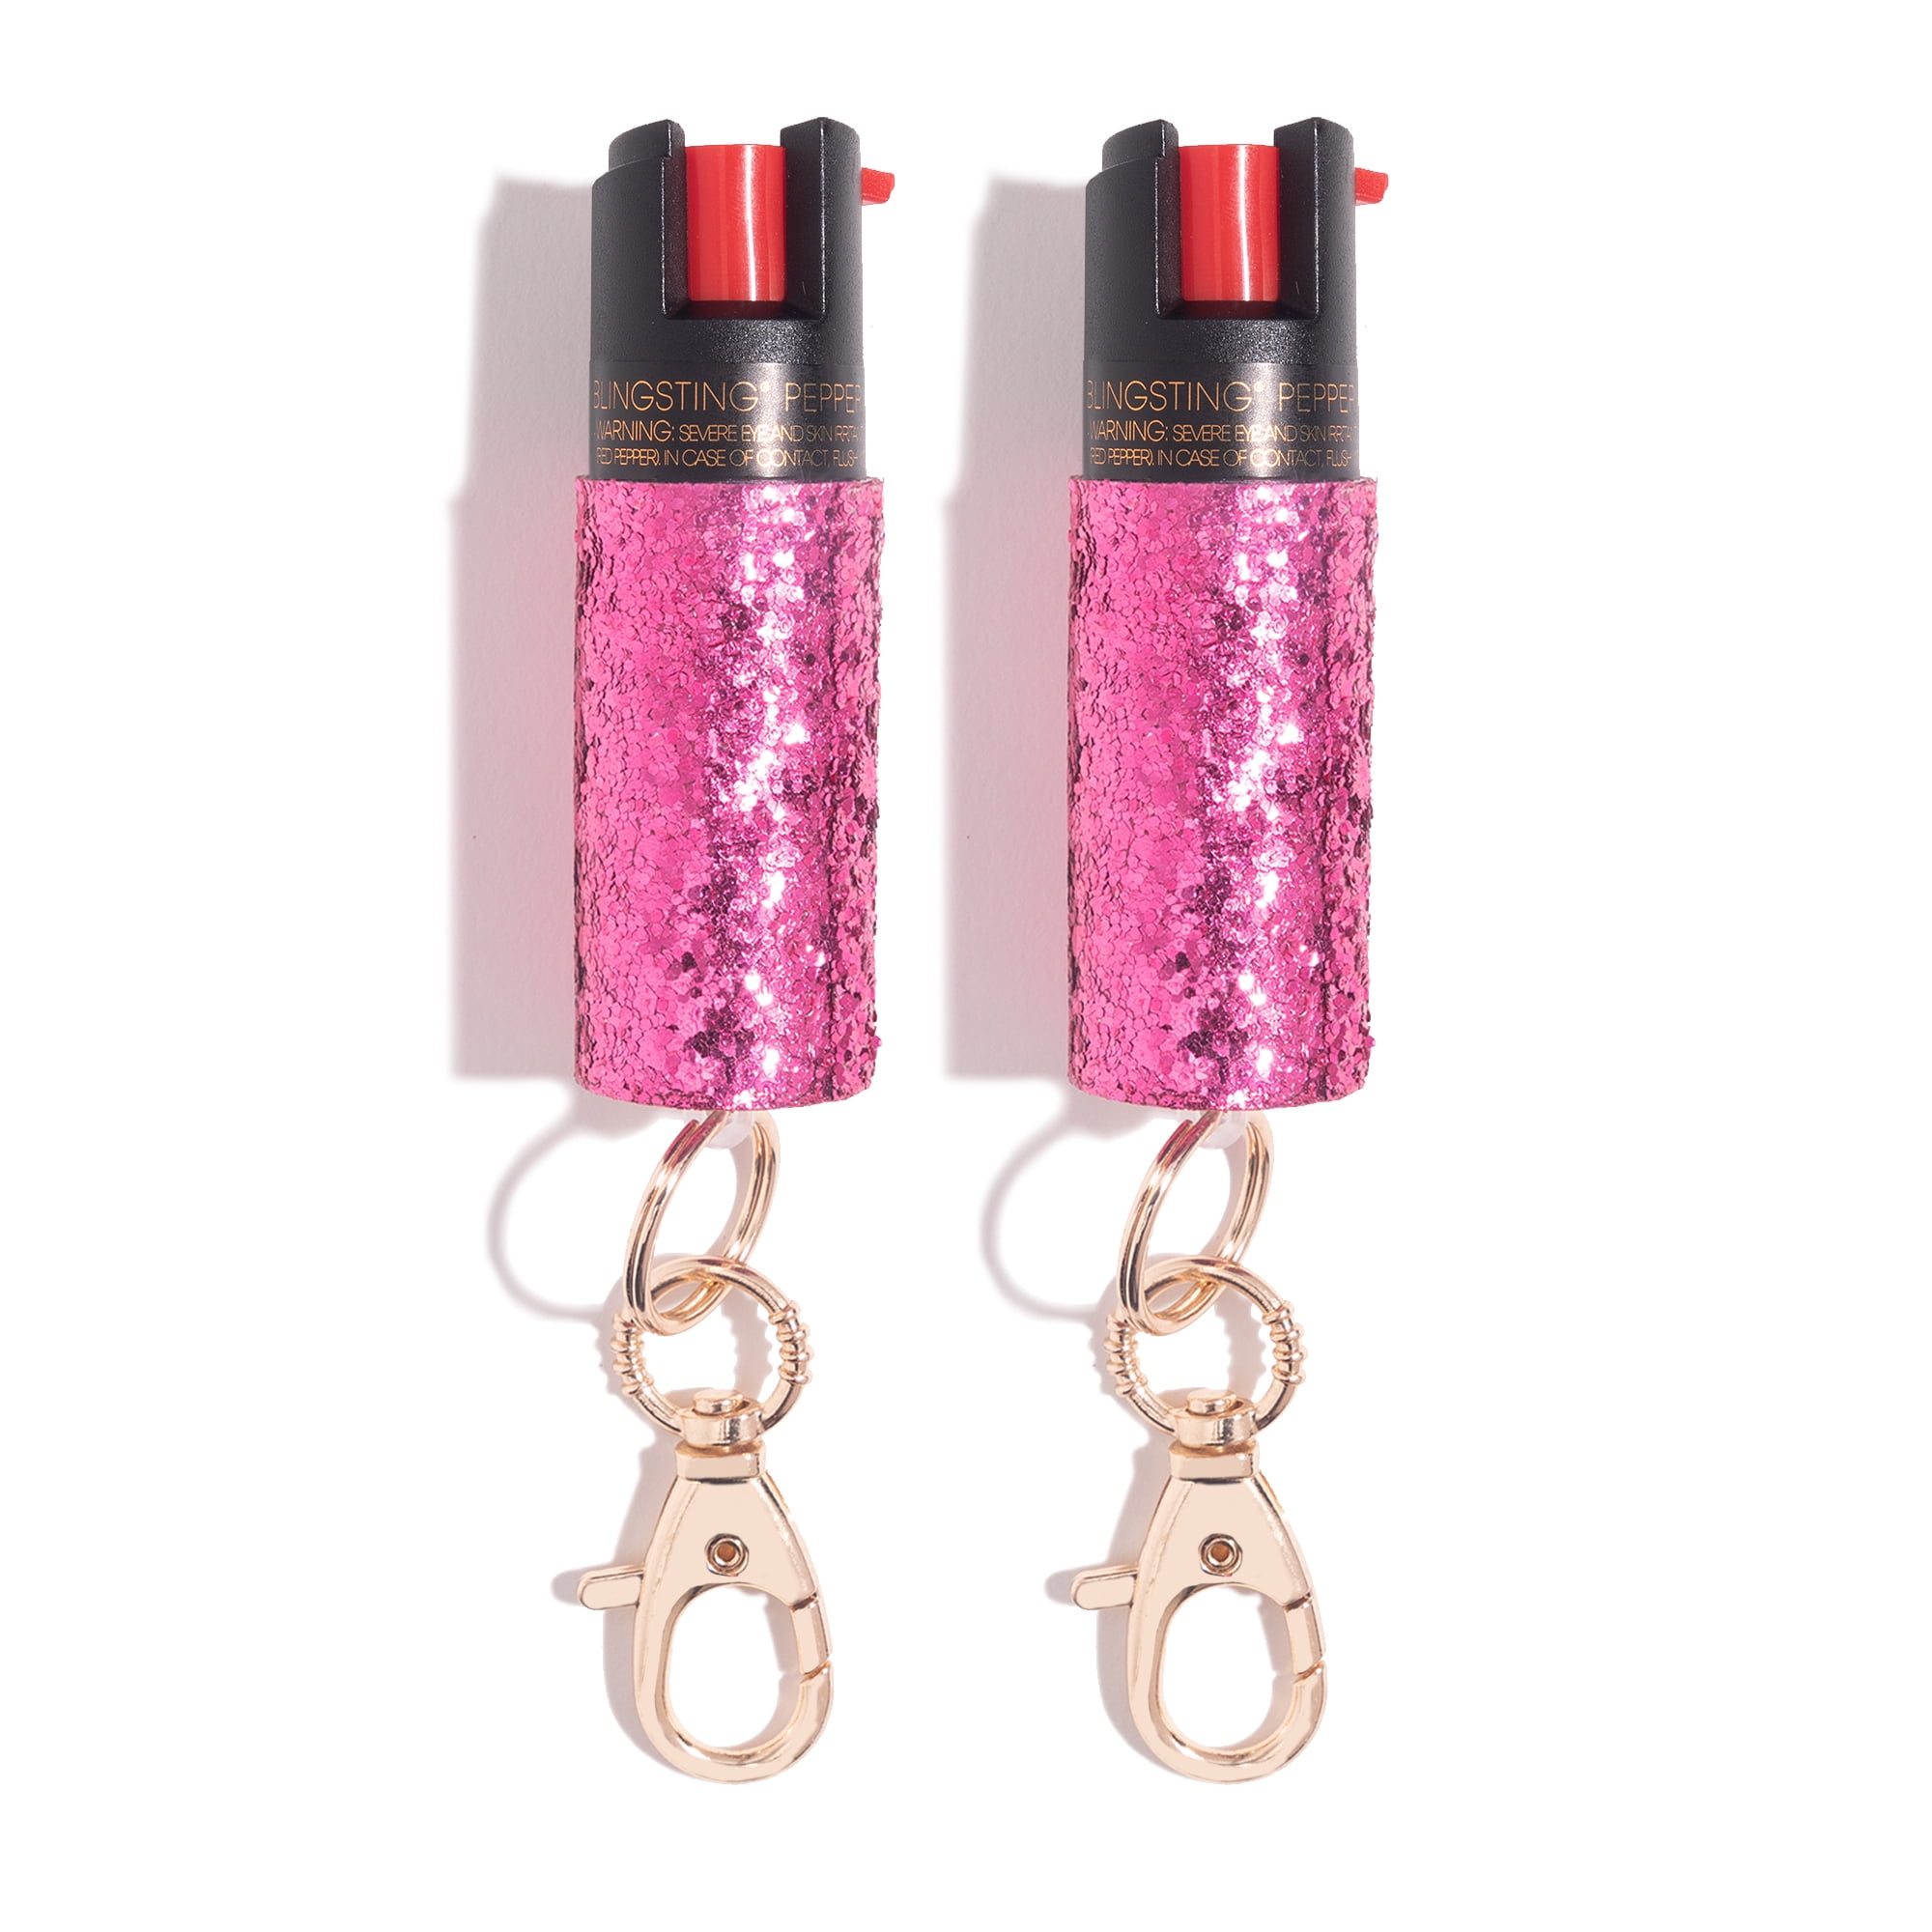 BLINGSTING Essentials Pepper Spray for Self Defense, Pink, 2 Pack 